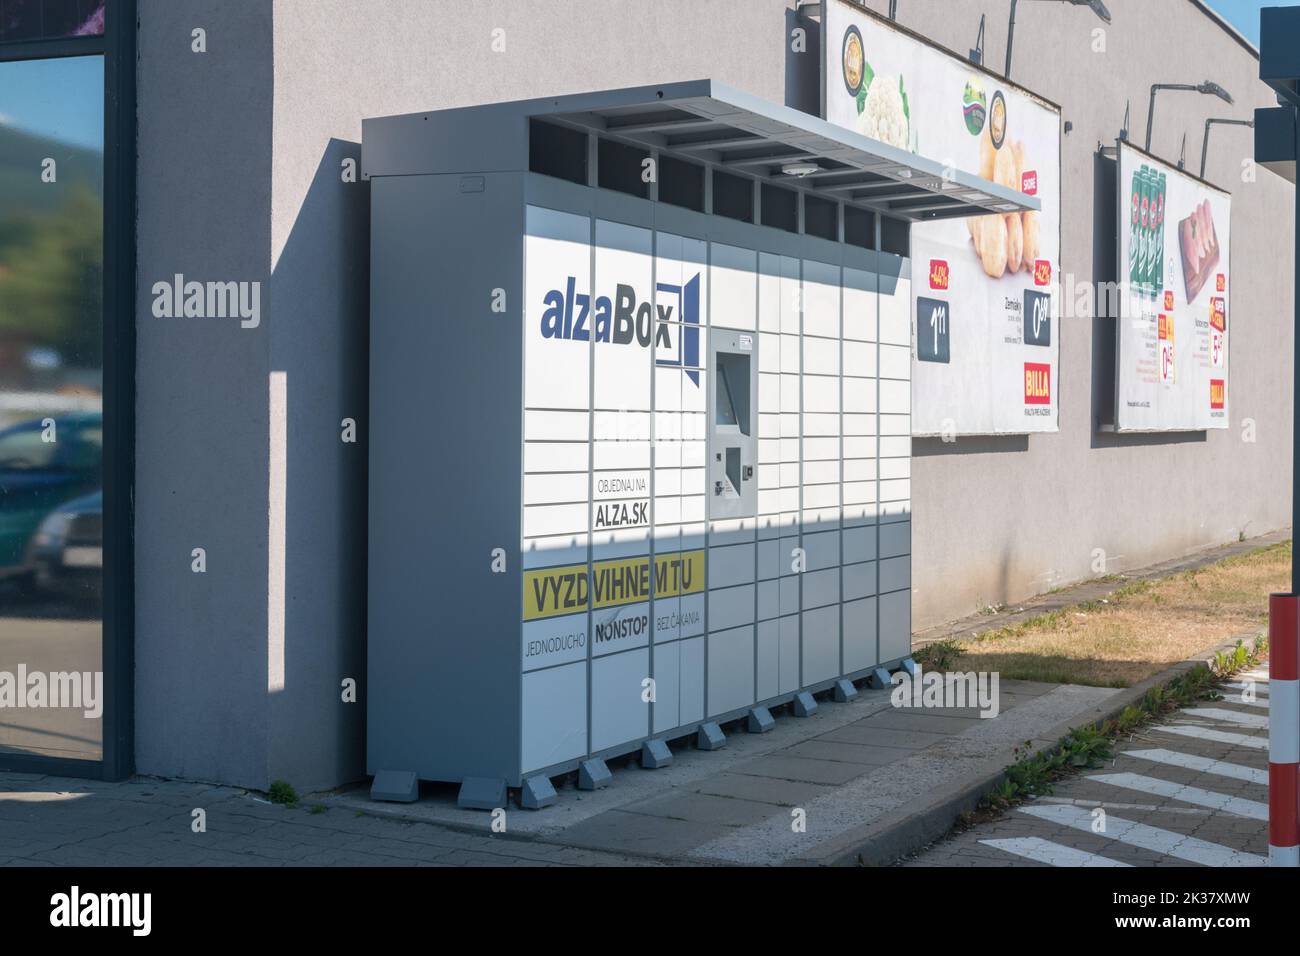 Alzabox hi-res stock photography and images - Alamy